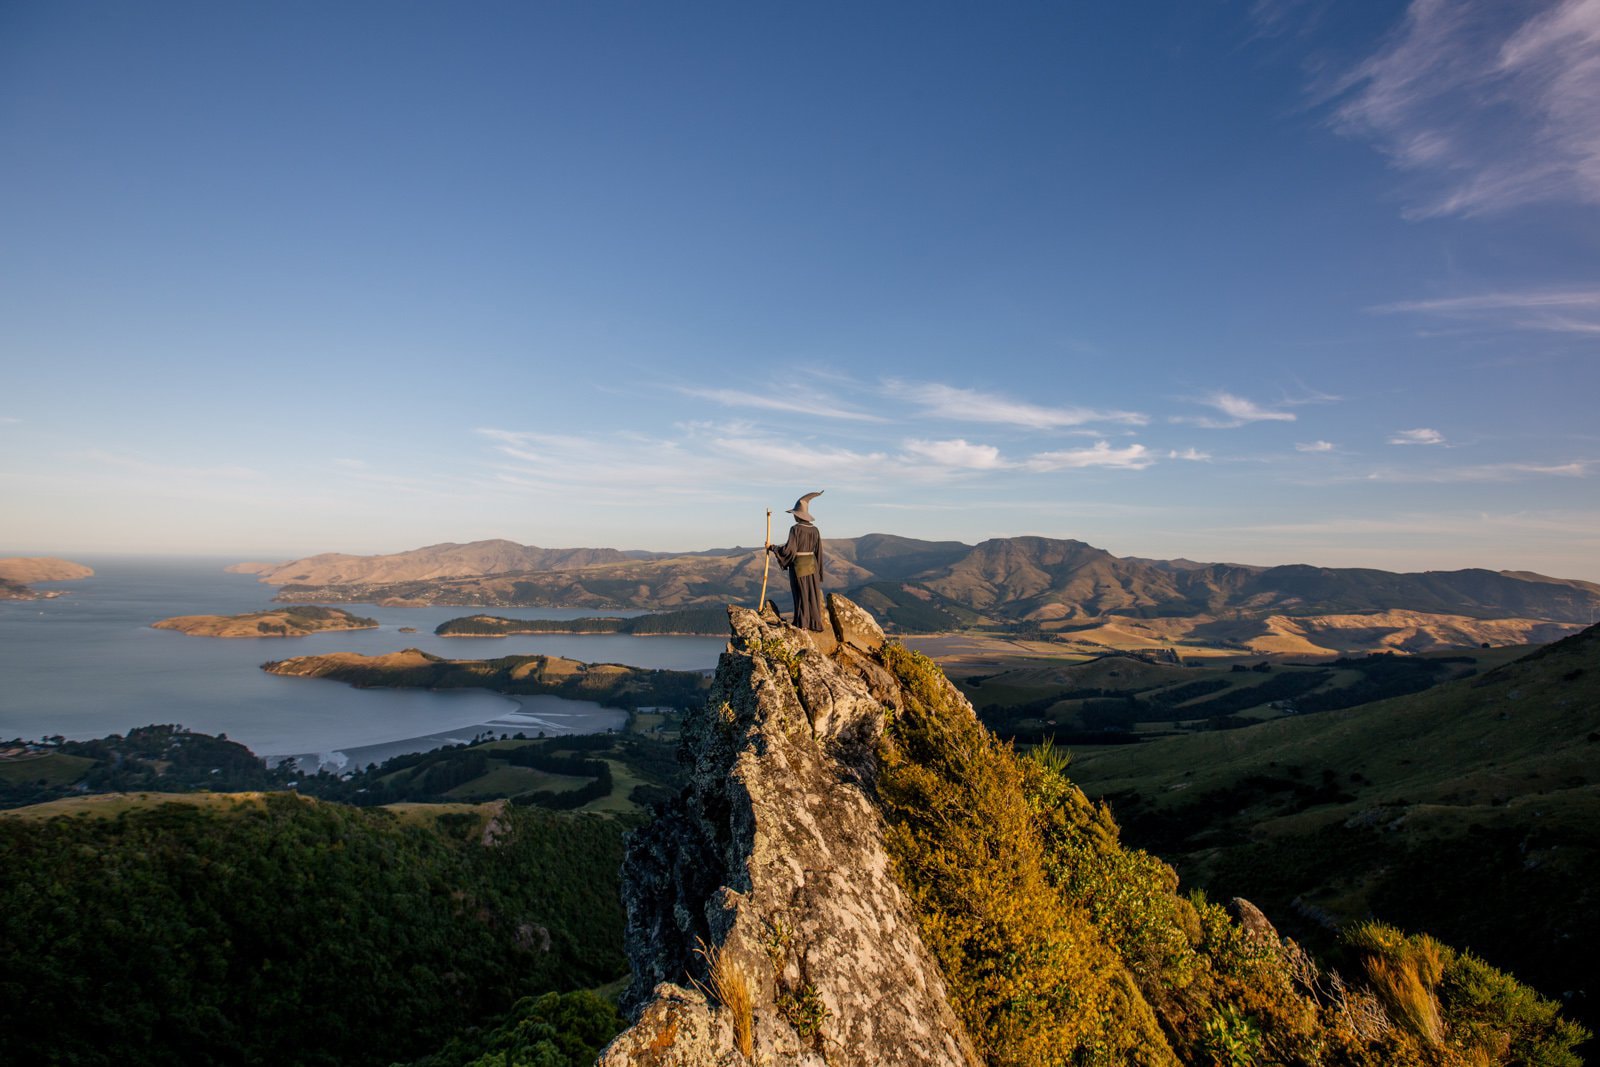 Gandalf New Zealand Photography Series